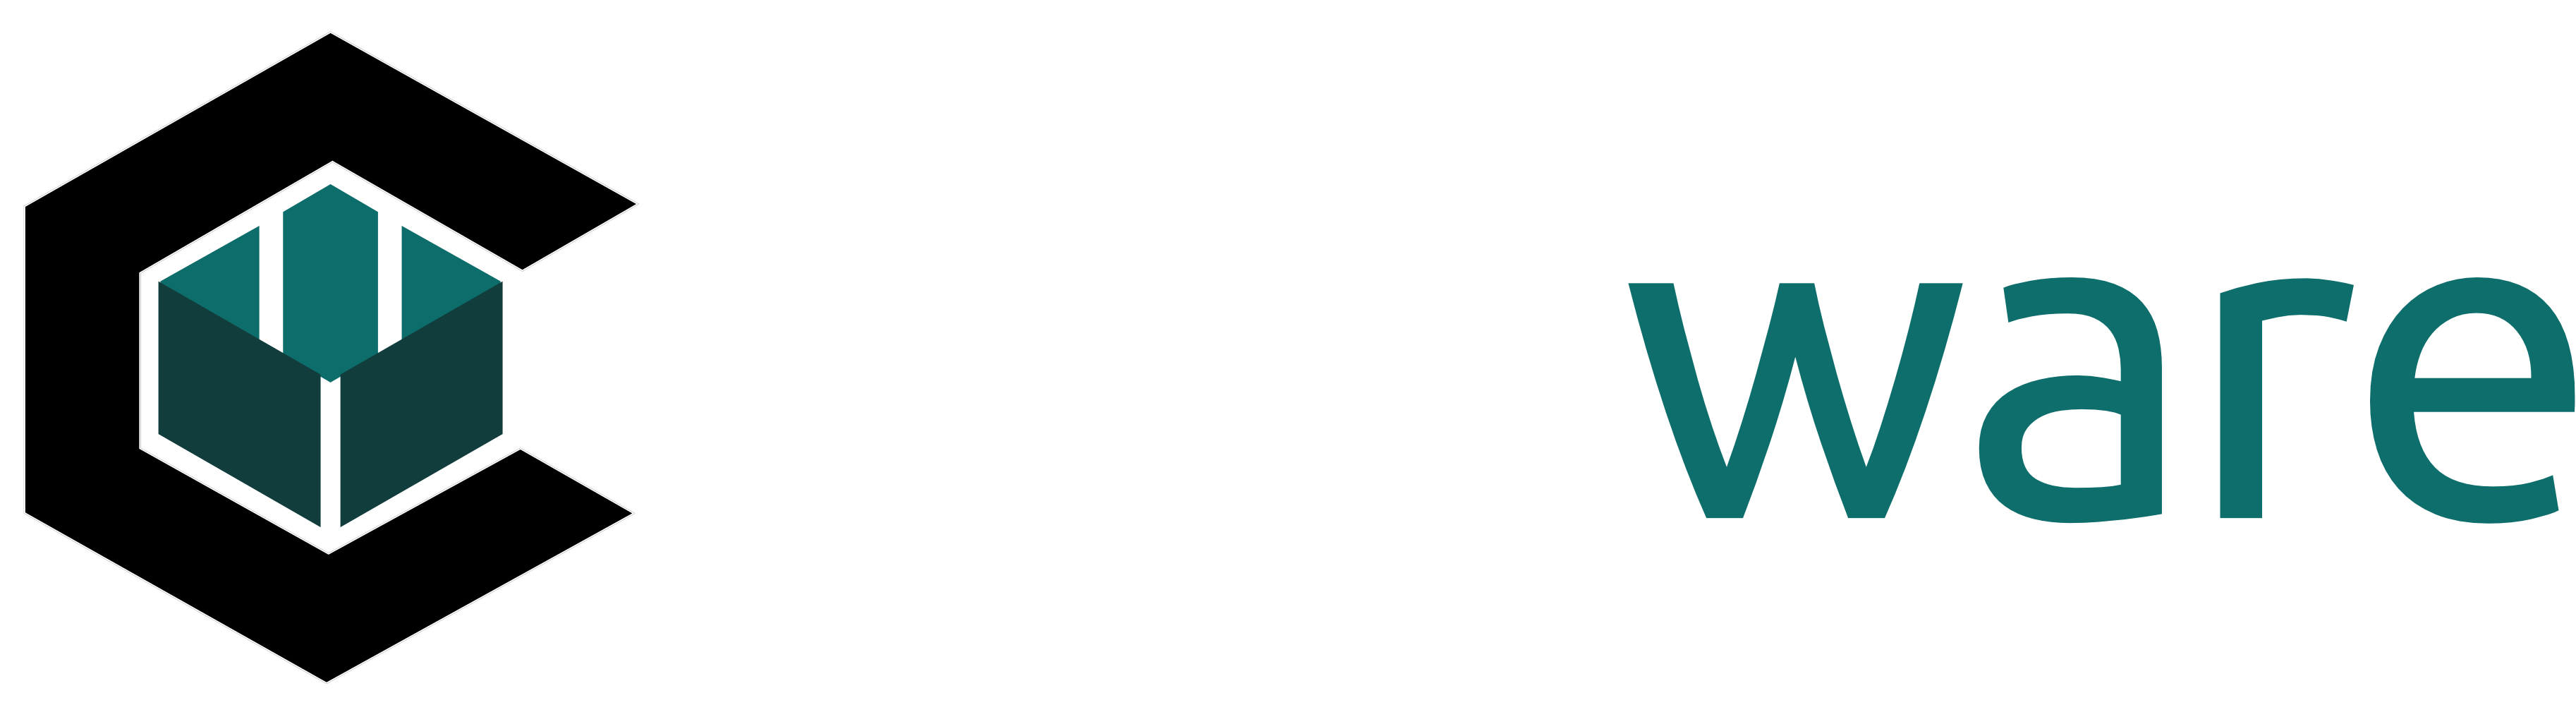 coreware-logo-white